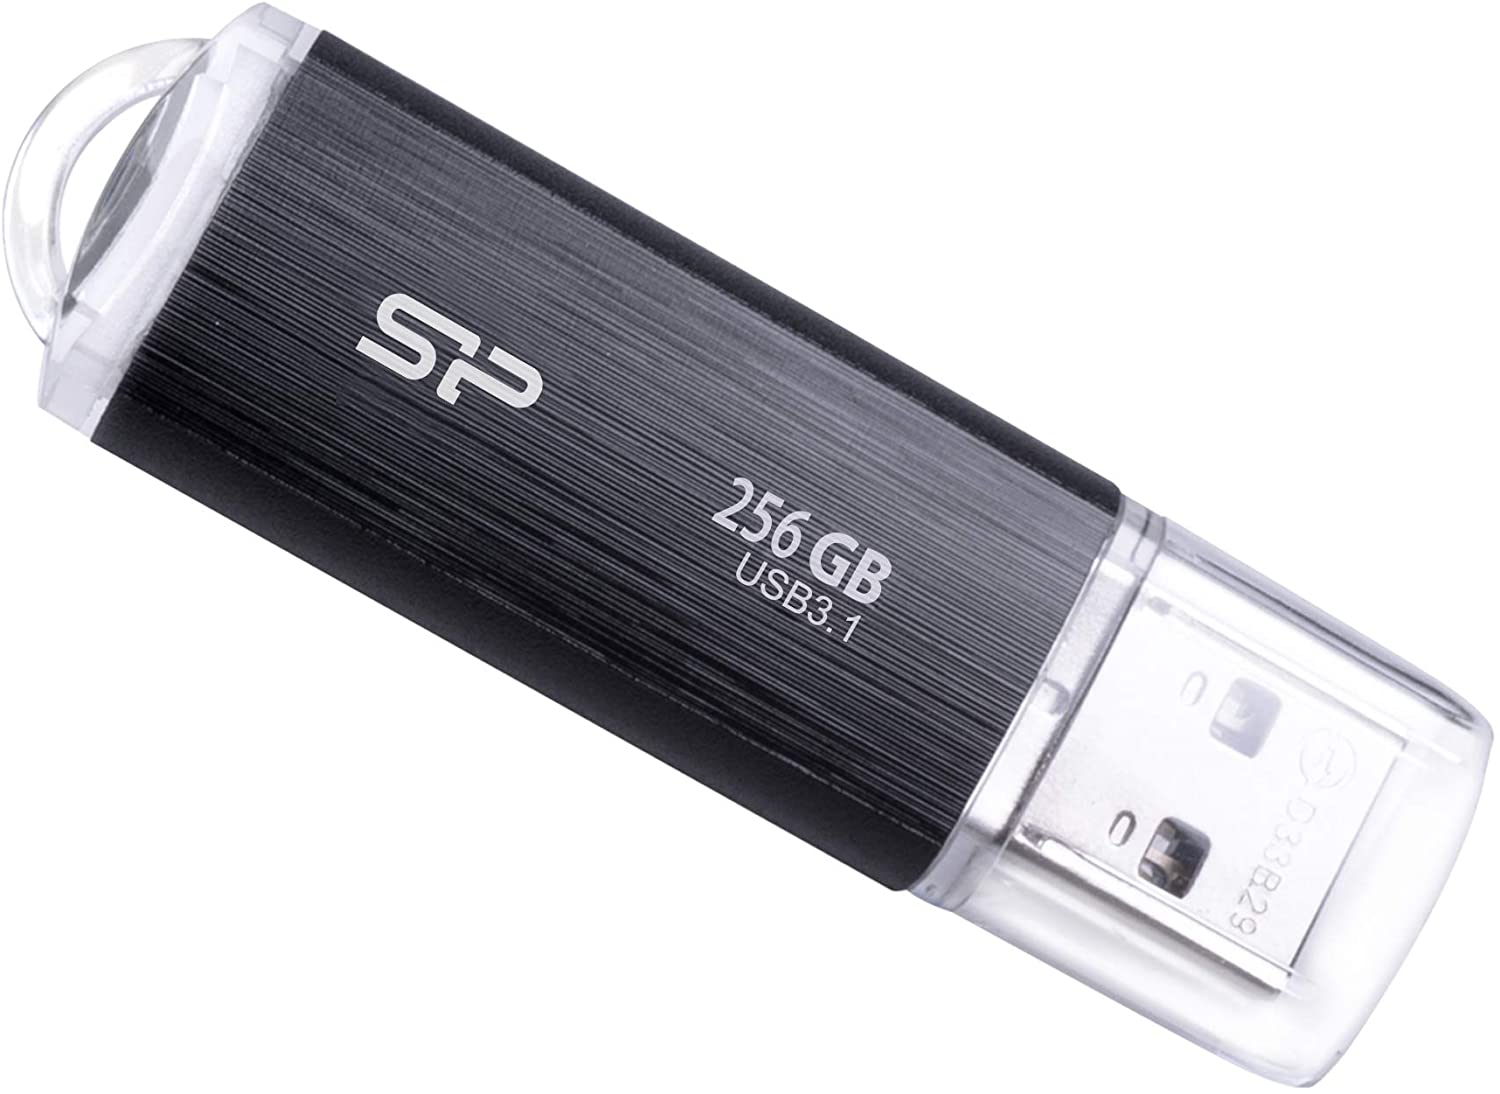 Silicon Power 256GB USB 3.0/3.1 Gen1 USB Flash Drive - Click Image to Close